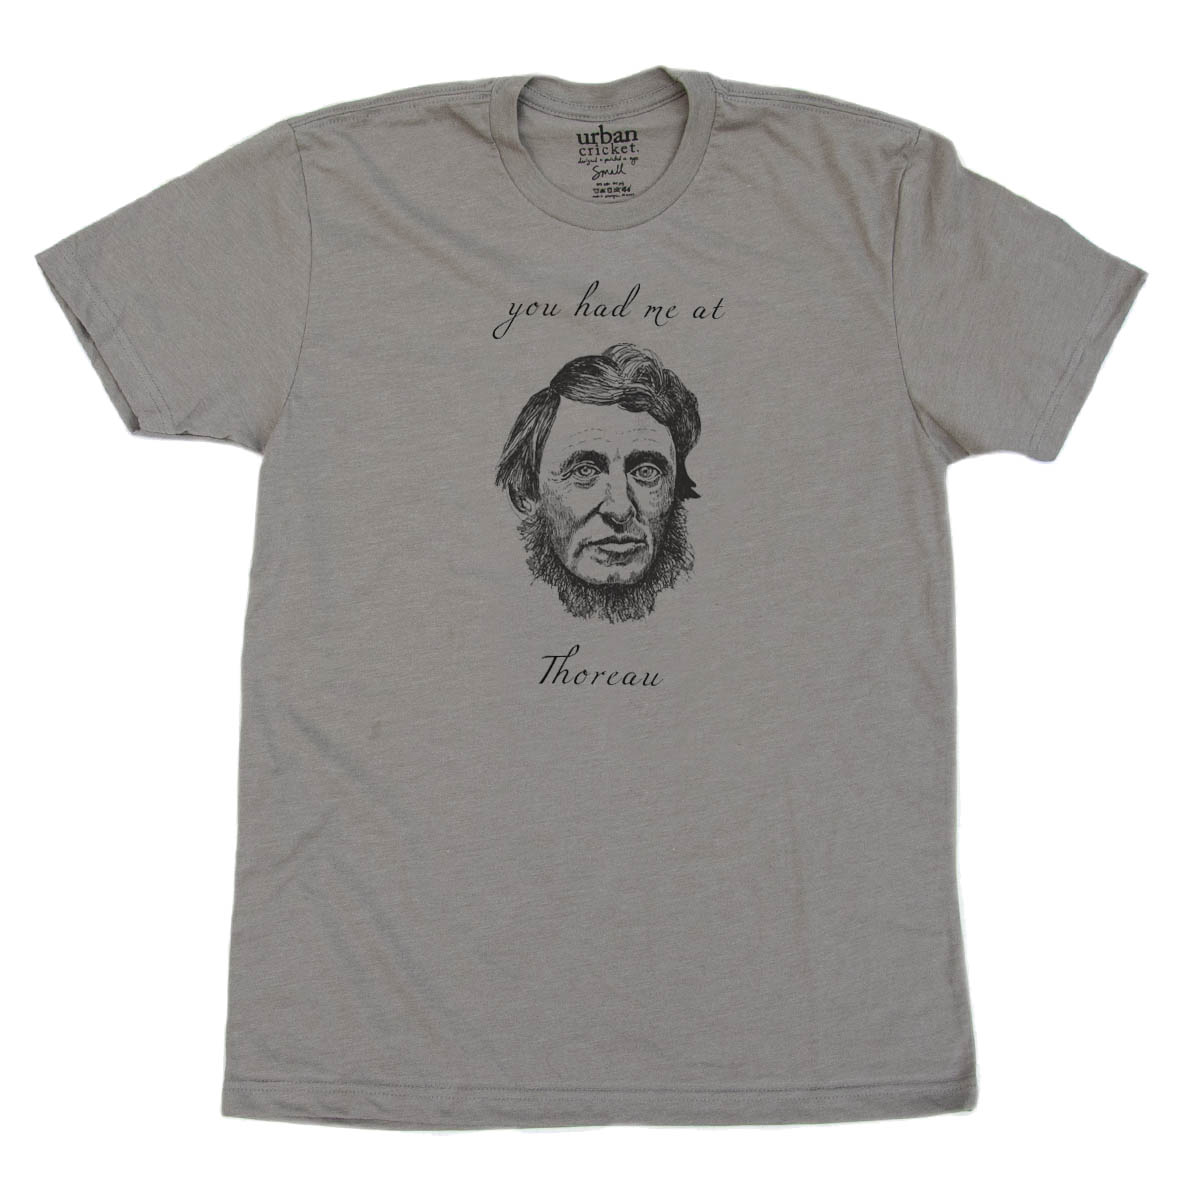 Thoreau. The Crew.